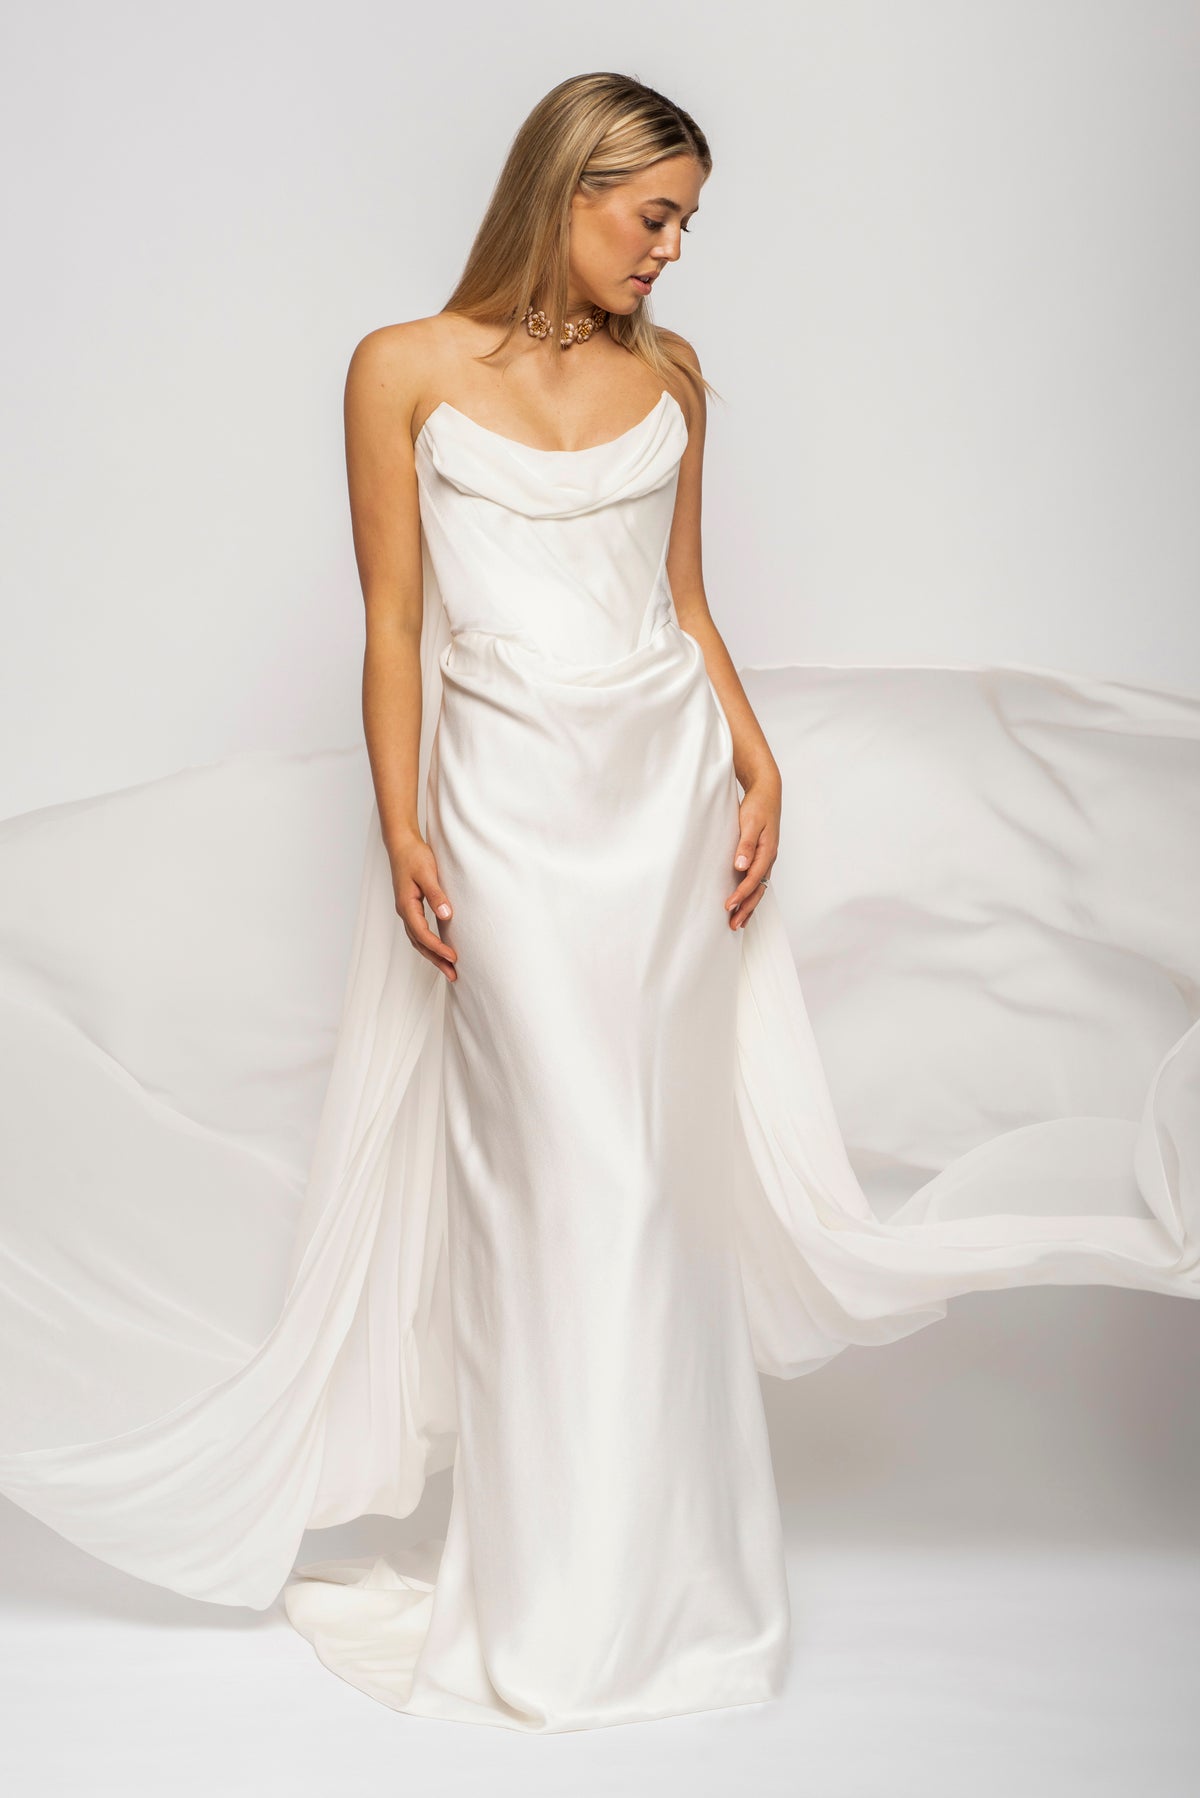 Vivienne Westwood Galaxy Cape Wedding Gown